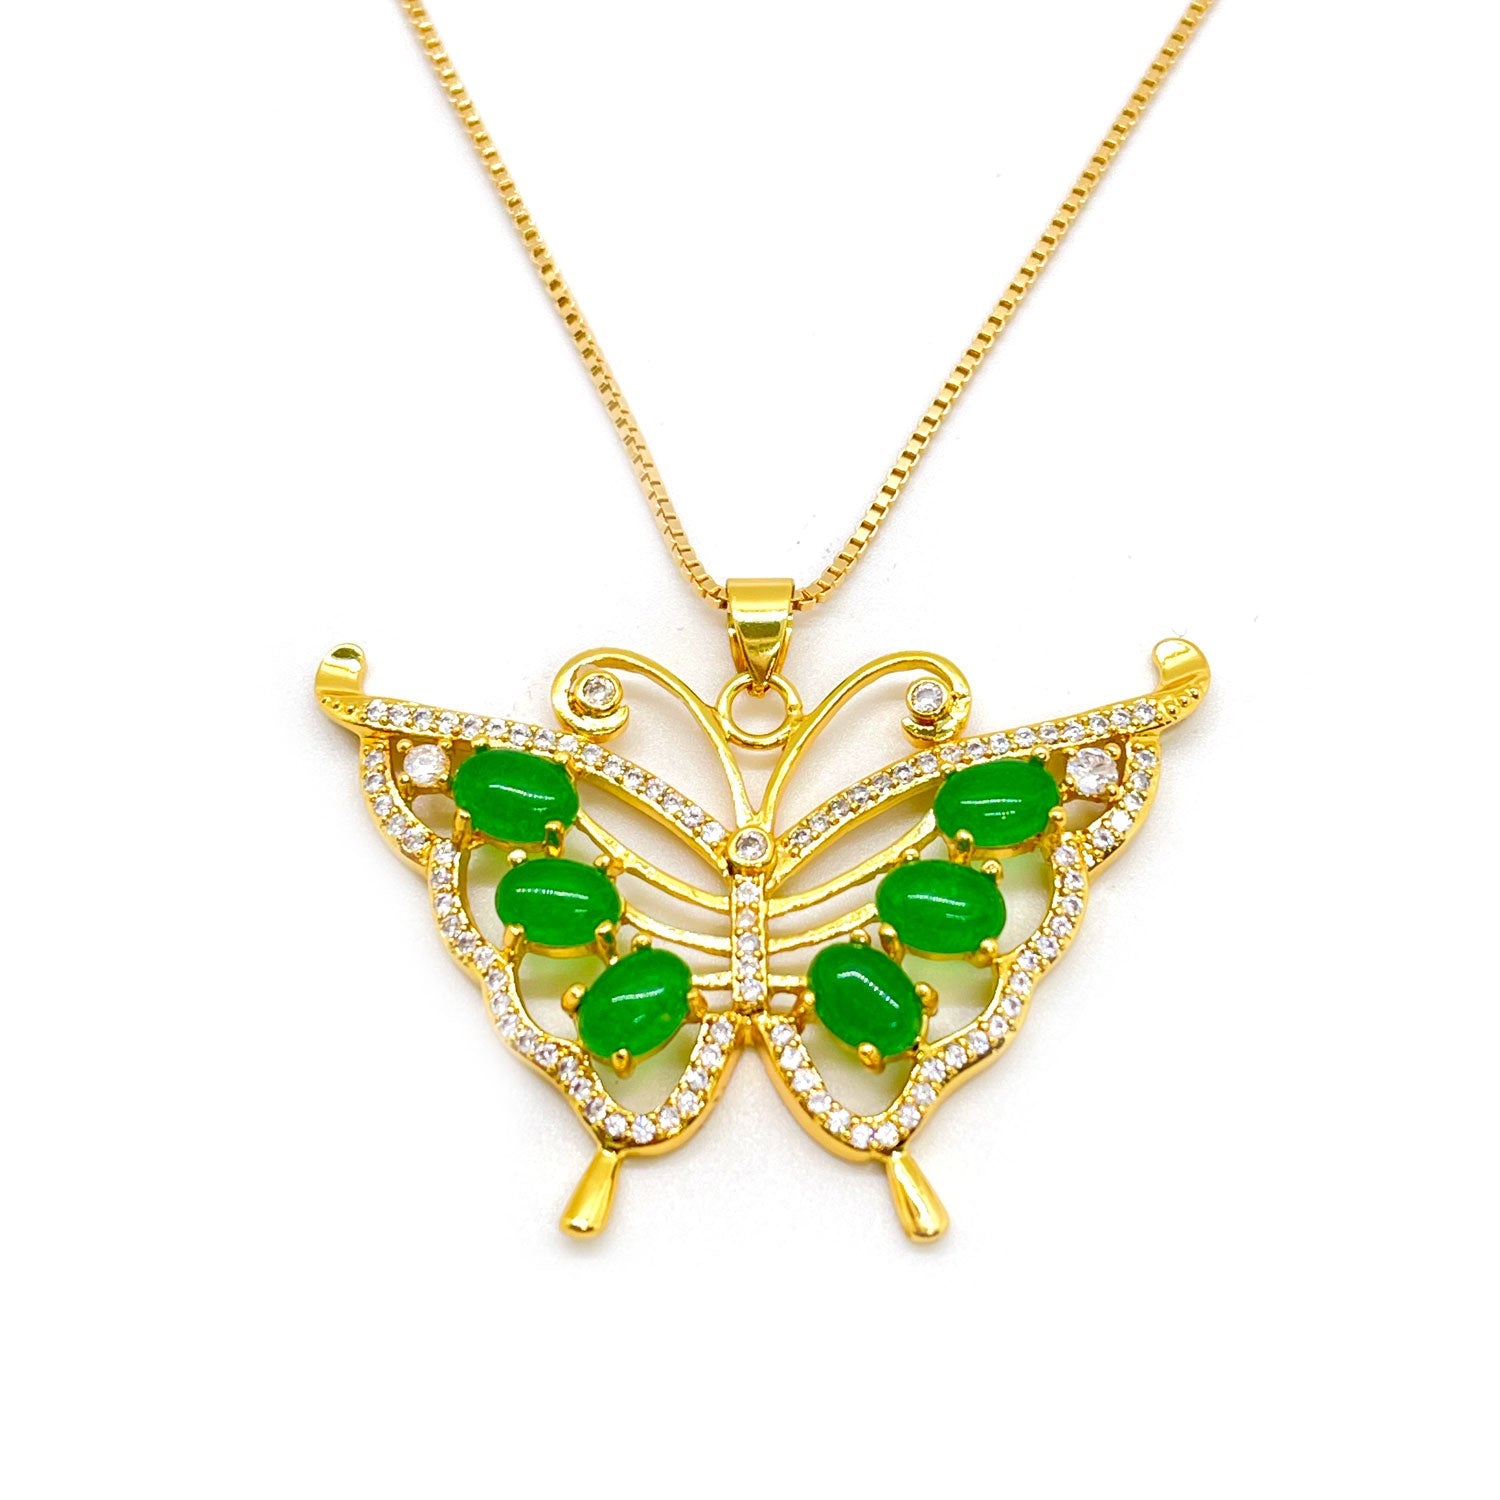 Spread Your Wings Jade Pendant Necklace